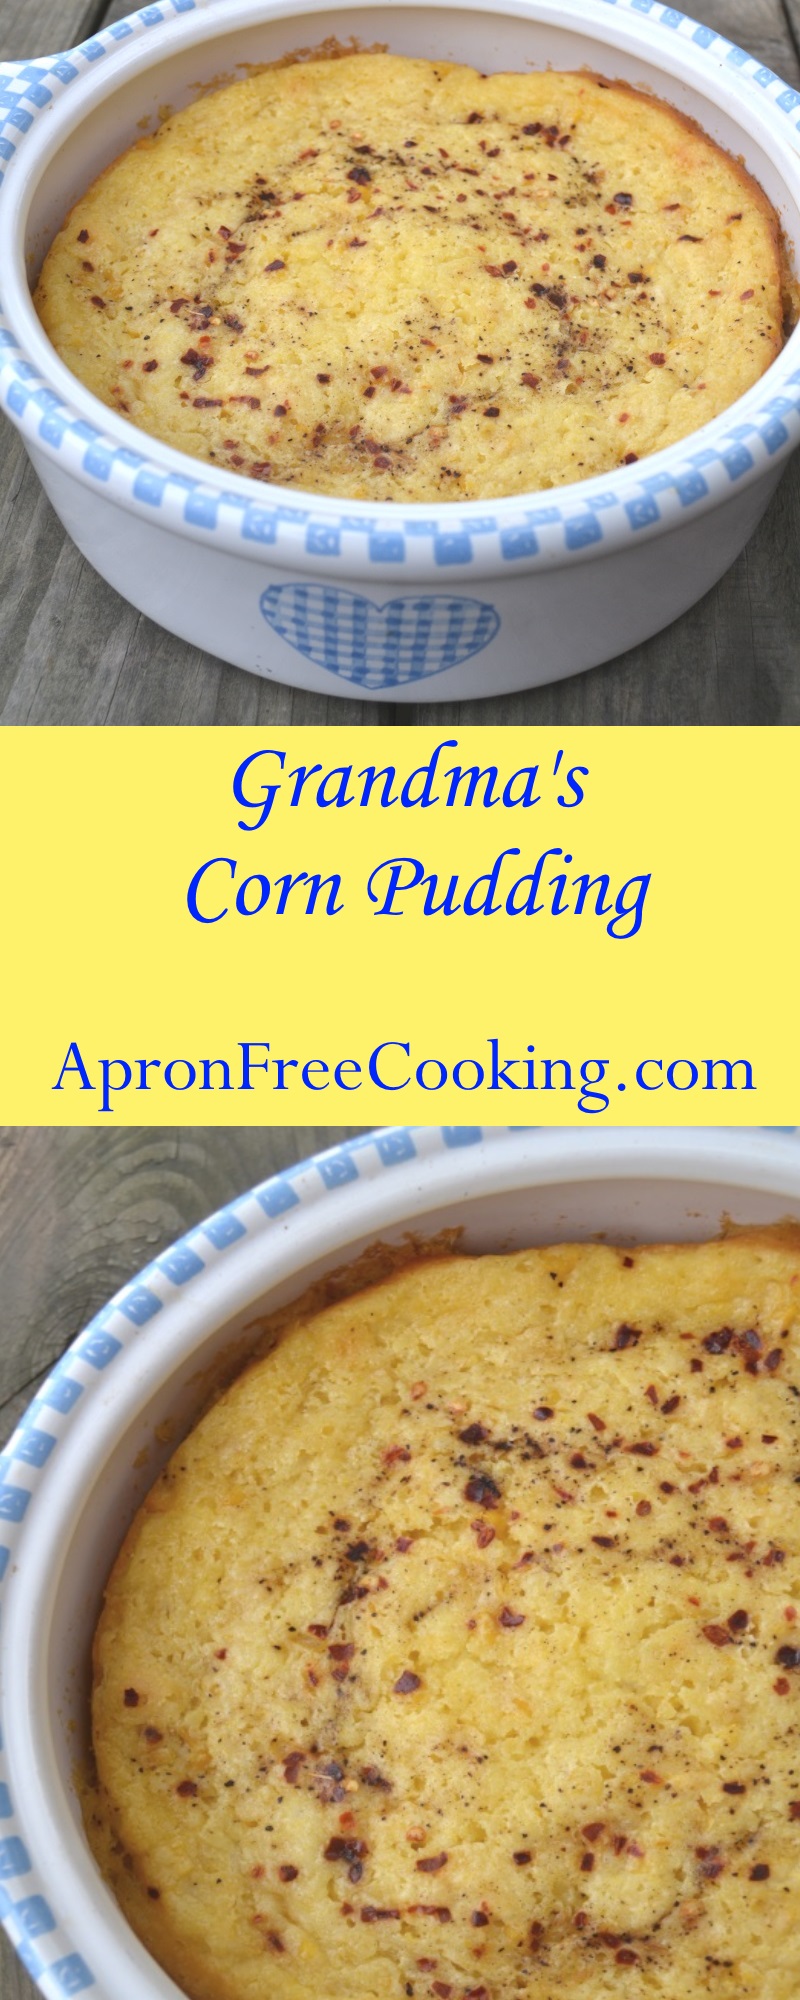 Grandma's Traditional Thanksgiving Corn Pudding Recipe • Apron Free Cooking